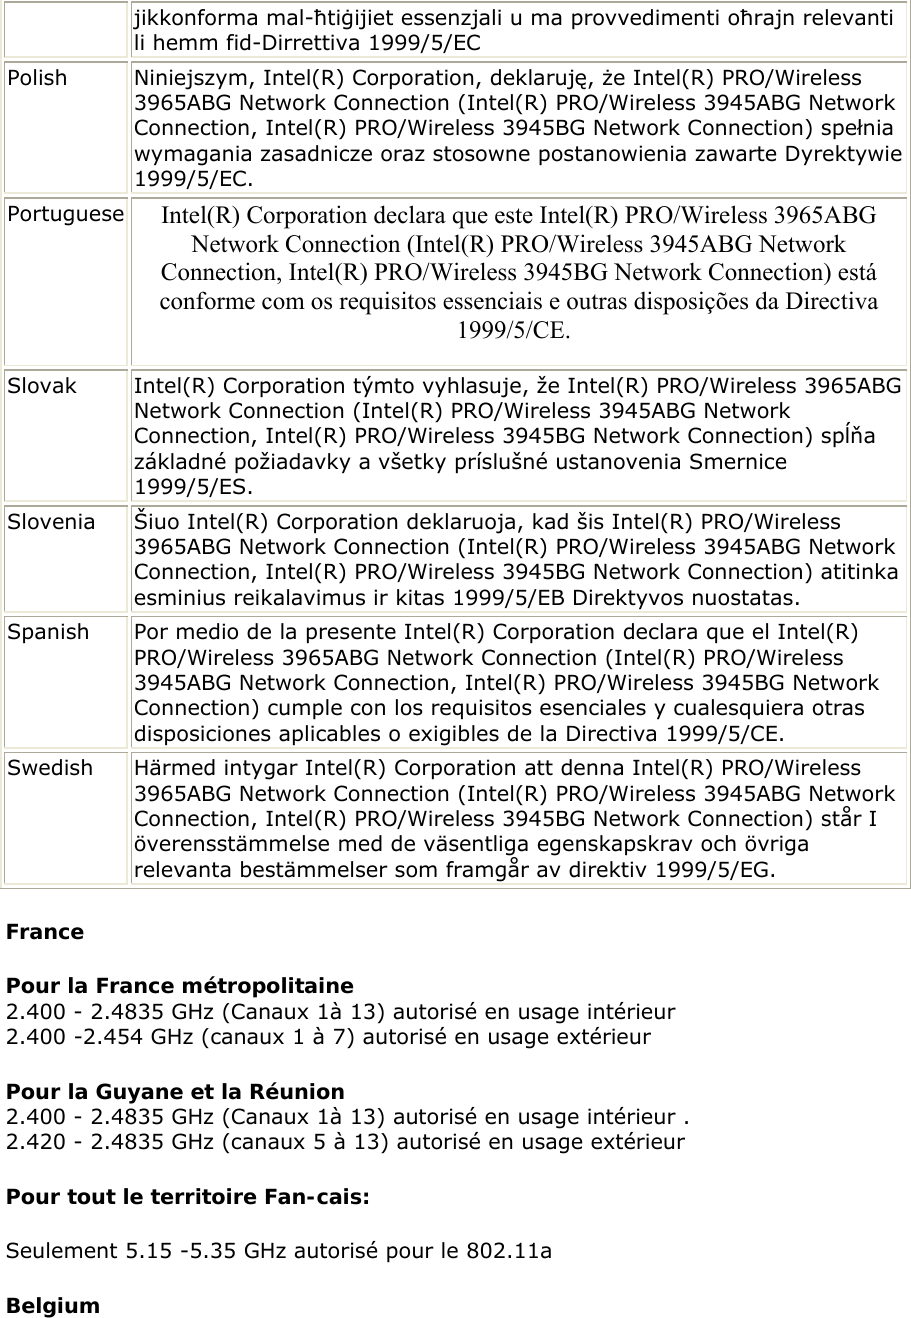 jikkonforma mal-ħtiġijiet essenzjali u ma provvedimenti oħrajn relevanti li hemm fid-Dirrettiva 1999/5/EC Polish  Niniejszym, Intel(R) Corporation, deklaruję, że Intel(R) PRO/Wireless 3965ABG Network Connection (Intel(R) PRO/Wireless 3945ABG Network Connection, Intel(R) PRO/Wireless 3945BG Network Connection) spełnia wymagania zasadnicze oraz stosowne postanowienia zawarte Dyrektywie 1999/5/EC. Portuguese  Intel(R) Corporation declara que este Intel(R) PRO/Wireless 3965ABG Network Connection (Intel(R) PRO/Wireless 3945ABG Network Connection, Intel(R) PRO/Wireless 3945BG Network Connection) está conforme com os requisitos essenciais e outras disposições da Directiva 1999/5/CE.     Slovak  Intel(R) Corporation týmto vyhlasuje, že Intel(R) PRO/Wireless 3965ABG Network Connection (Intel(R) PRO/Wireless 3945ABG Network Connection, Intel(R) PRO/Wireless 3945BG Network Connection) spĺňa základné požiadavky a všetky príslušné ustanovenia Smernice 1999/5/ES. Slovenia  Šiuo Intel(R) Corporation deklaruoja, kad šis Intel(R) PRO/Wireless 3965ABG Network Connection (Intel(R) PRO/Wireless 3945ABG Network Connection, Intel(R) PRO/Wireless 3945BG Network Connection) atitinka esminius reikalavimus ir kitas 1999/5/EB Direktyvos nuostatas. Spanish  Por medio de la presente Intel(R) Corporation declara que el Intel(R) PRO/Wireless 3965ABG Network Connection (Intel(R) PRO/Wireless 3945ABG Network Connection, Intel(R) PRO/Wireless 3945BG Network Connection) cumple con los requisitos esenciales y cualesquiera otras disposiciones aplicables o exigibles de la Directiva 1999/5/CE.  Swedish  Härmed intygar Intel(R) Corporation att denna Intel(R) PRO/Wireless 3965ABG Network Connection (Intel(R) PRO/Wireless 3945ABG Network Connection, Intel(R) PRO/Wireless 3945BG Network Connection) står I överensstämmelse med de väsentliga egenskapskrav och övriga relevanta bestämmelser som framgår av direktiv 1999/5/EG. France  Pour la France métropolitaine 2.400 - 2.4835 GHz (Canaux 1à 13) autorisé en usage intérieur  2.400 -2.454 GHz (canaux 1 à 7) autorisé en usage extérieur  Pour la Guyane et la Réunion  2.400 - 2.4835 GHz (Canaux 1à 13) autorisé en usage intérieur .  2.420 - 2.4835 GHz (canaux 5 à 13) autorisé en usage extérieur  Pour tout le territoire Fan-cais:  Seulement 5.15 -5.35 GHz autorisé pour le 802.11a  Belgium  